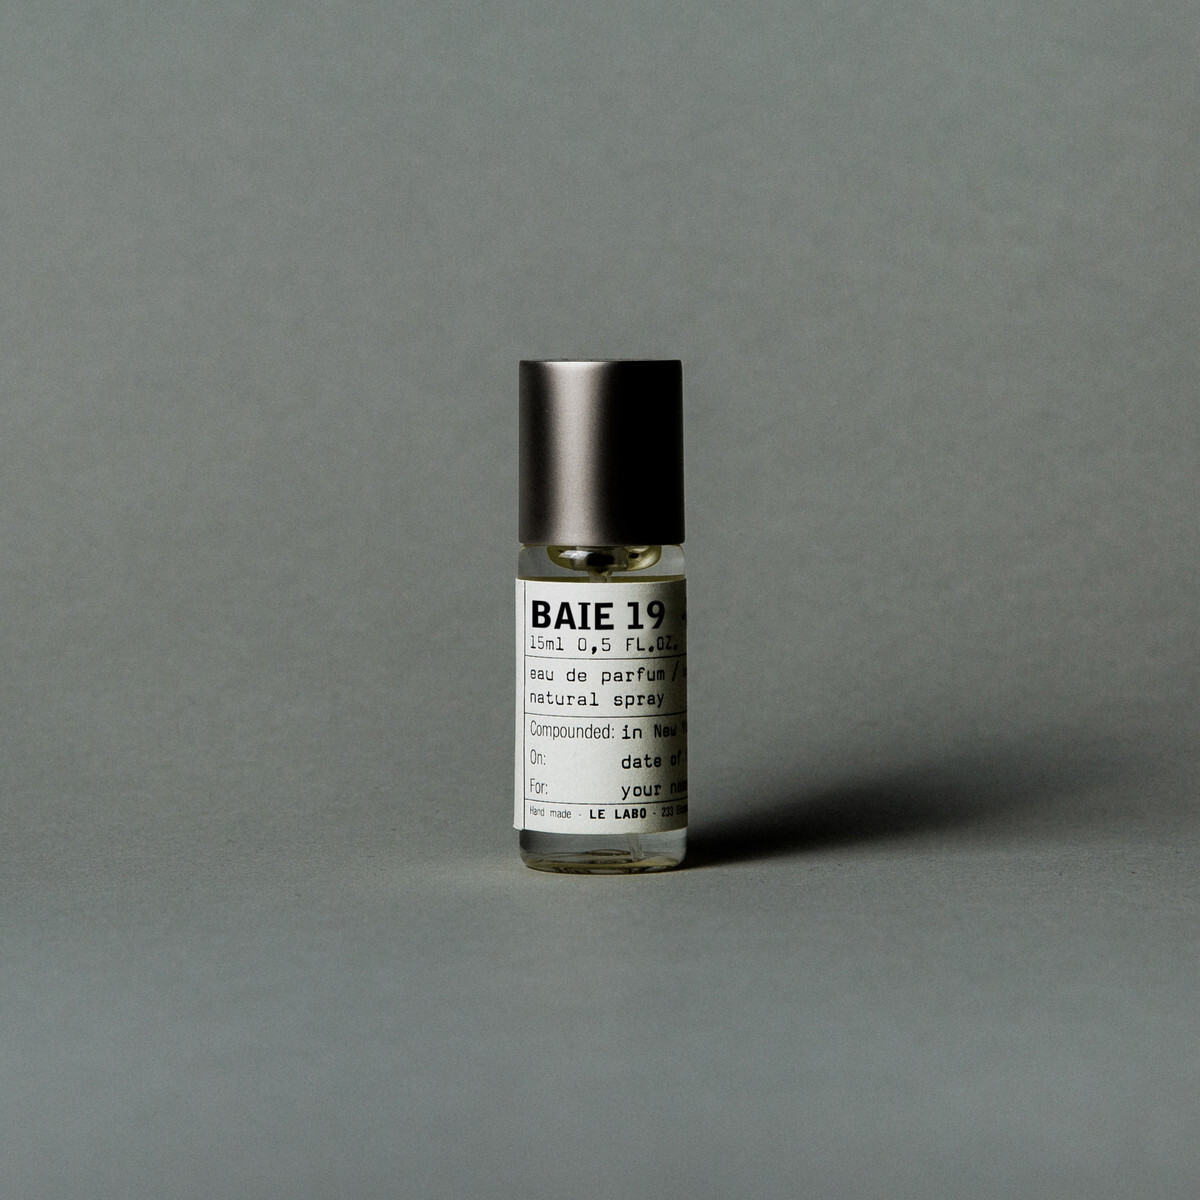 BAIE 19 | Le Labo Fragrances